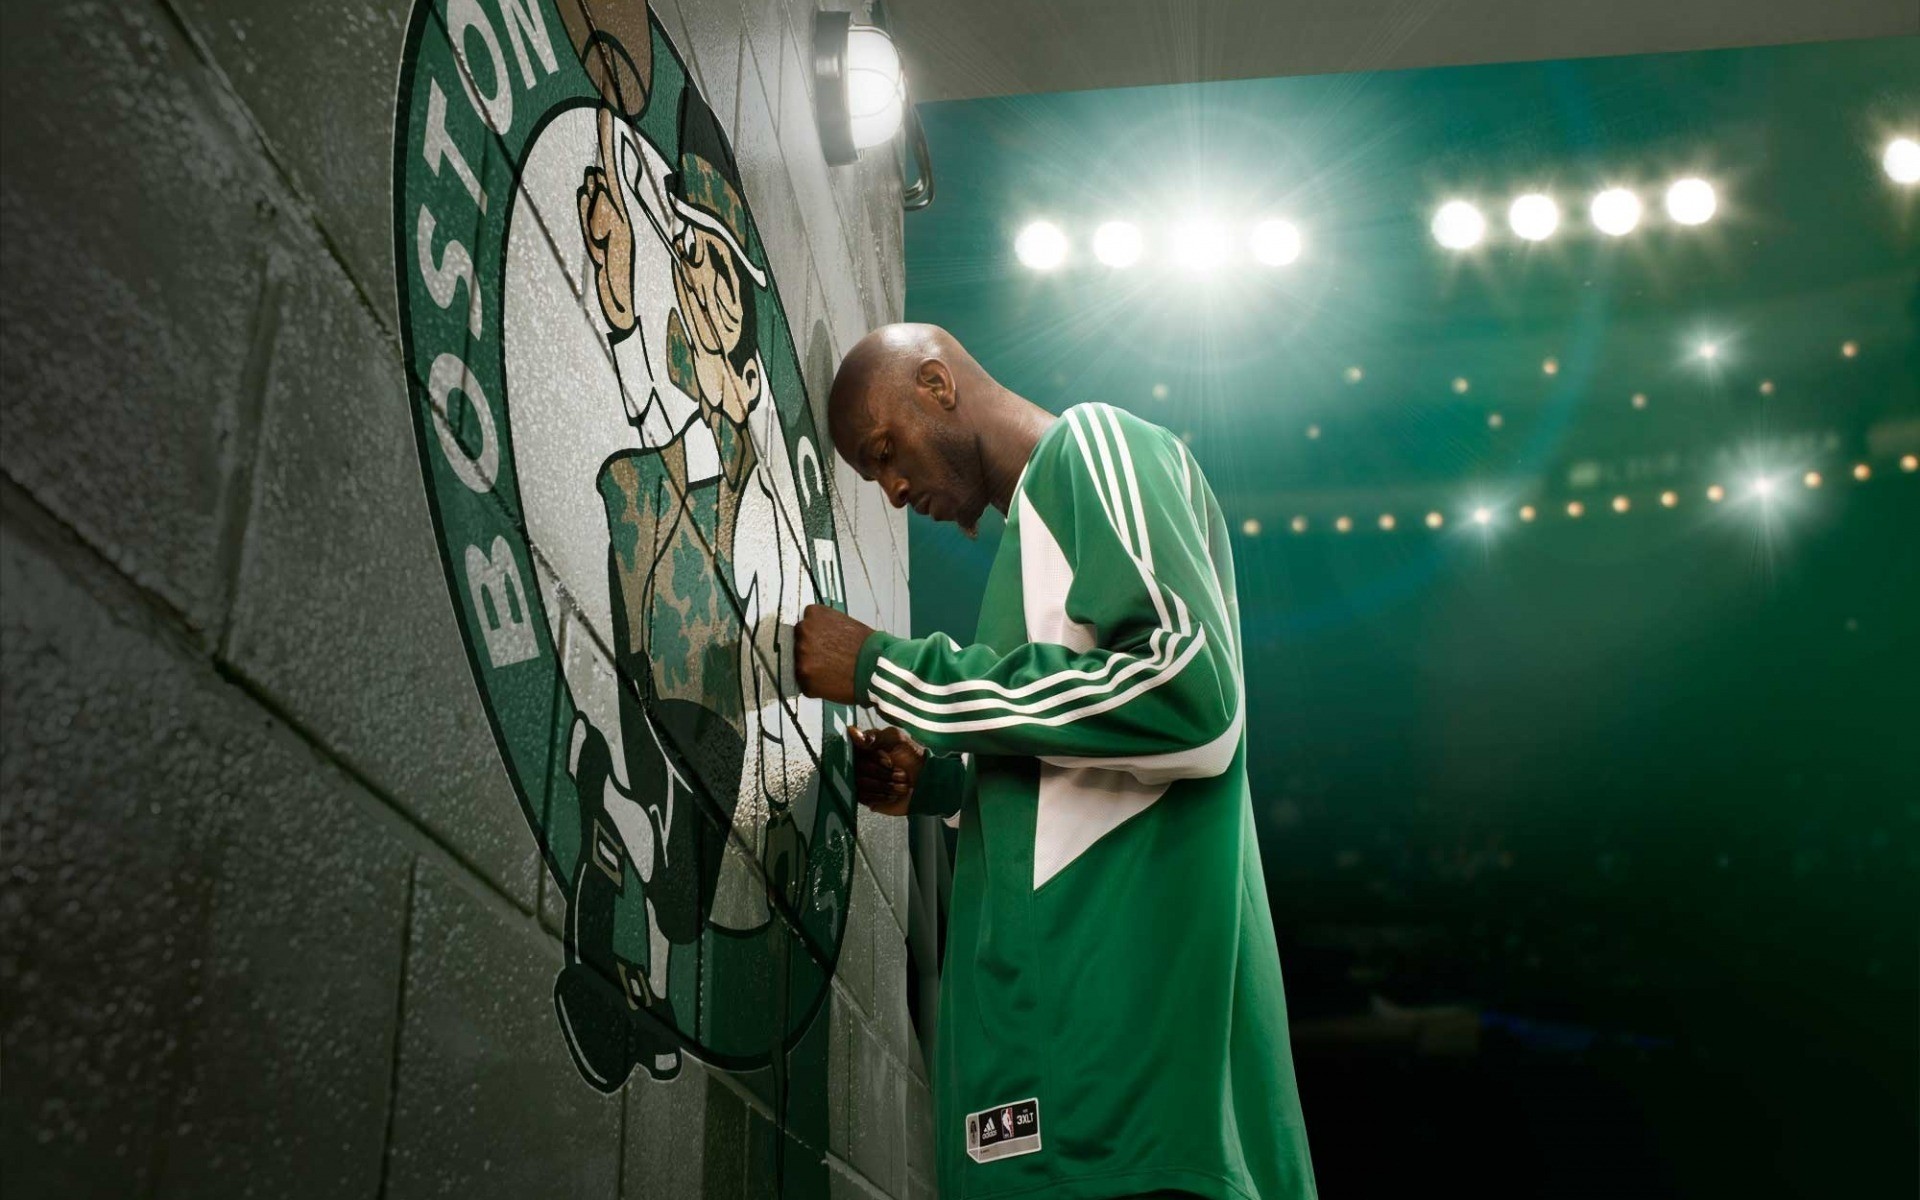 Boston Celtics 2023 Wallpapers - Wallpaper Cave